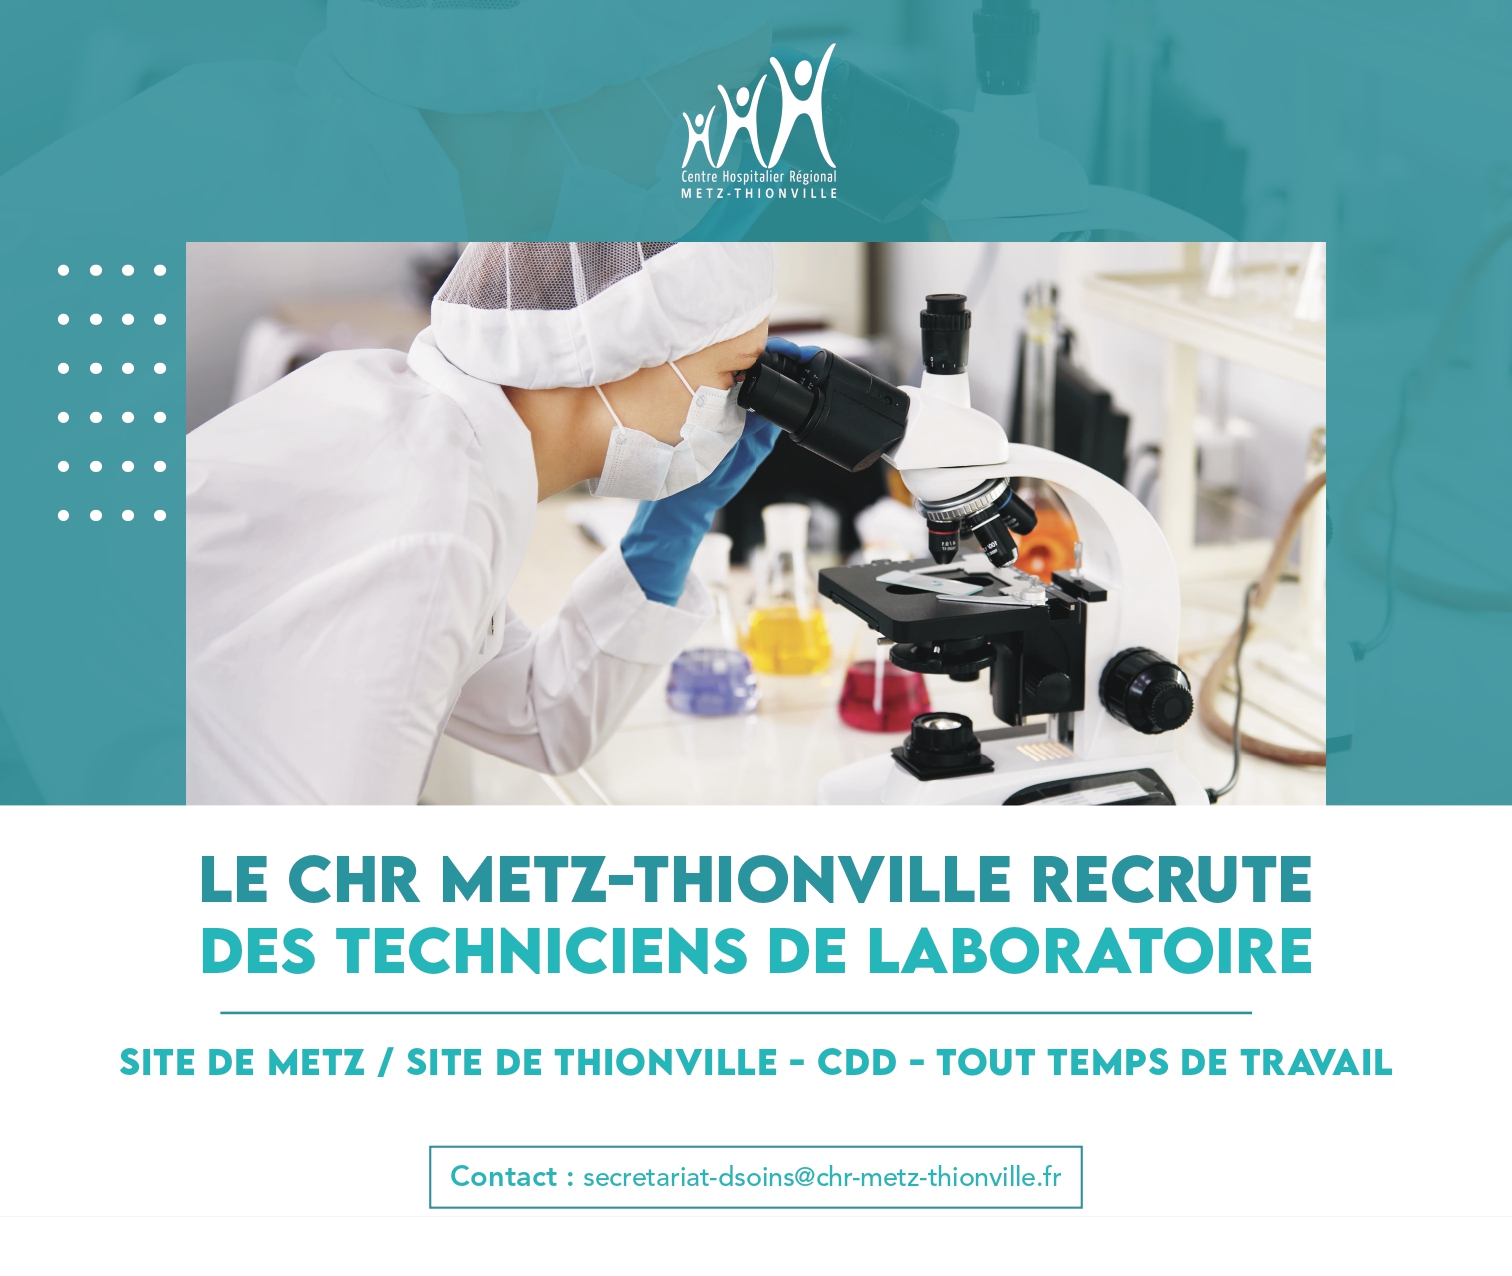 Visuel de recrutement de techniciens de laboratoires